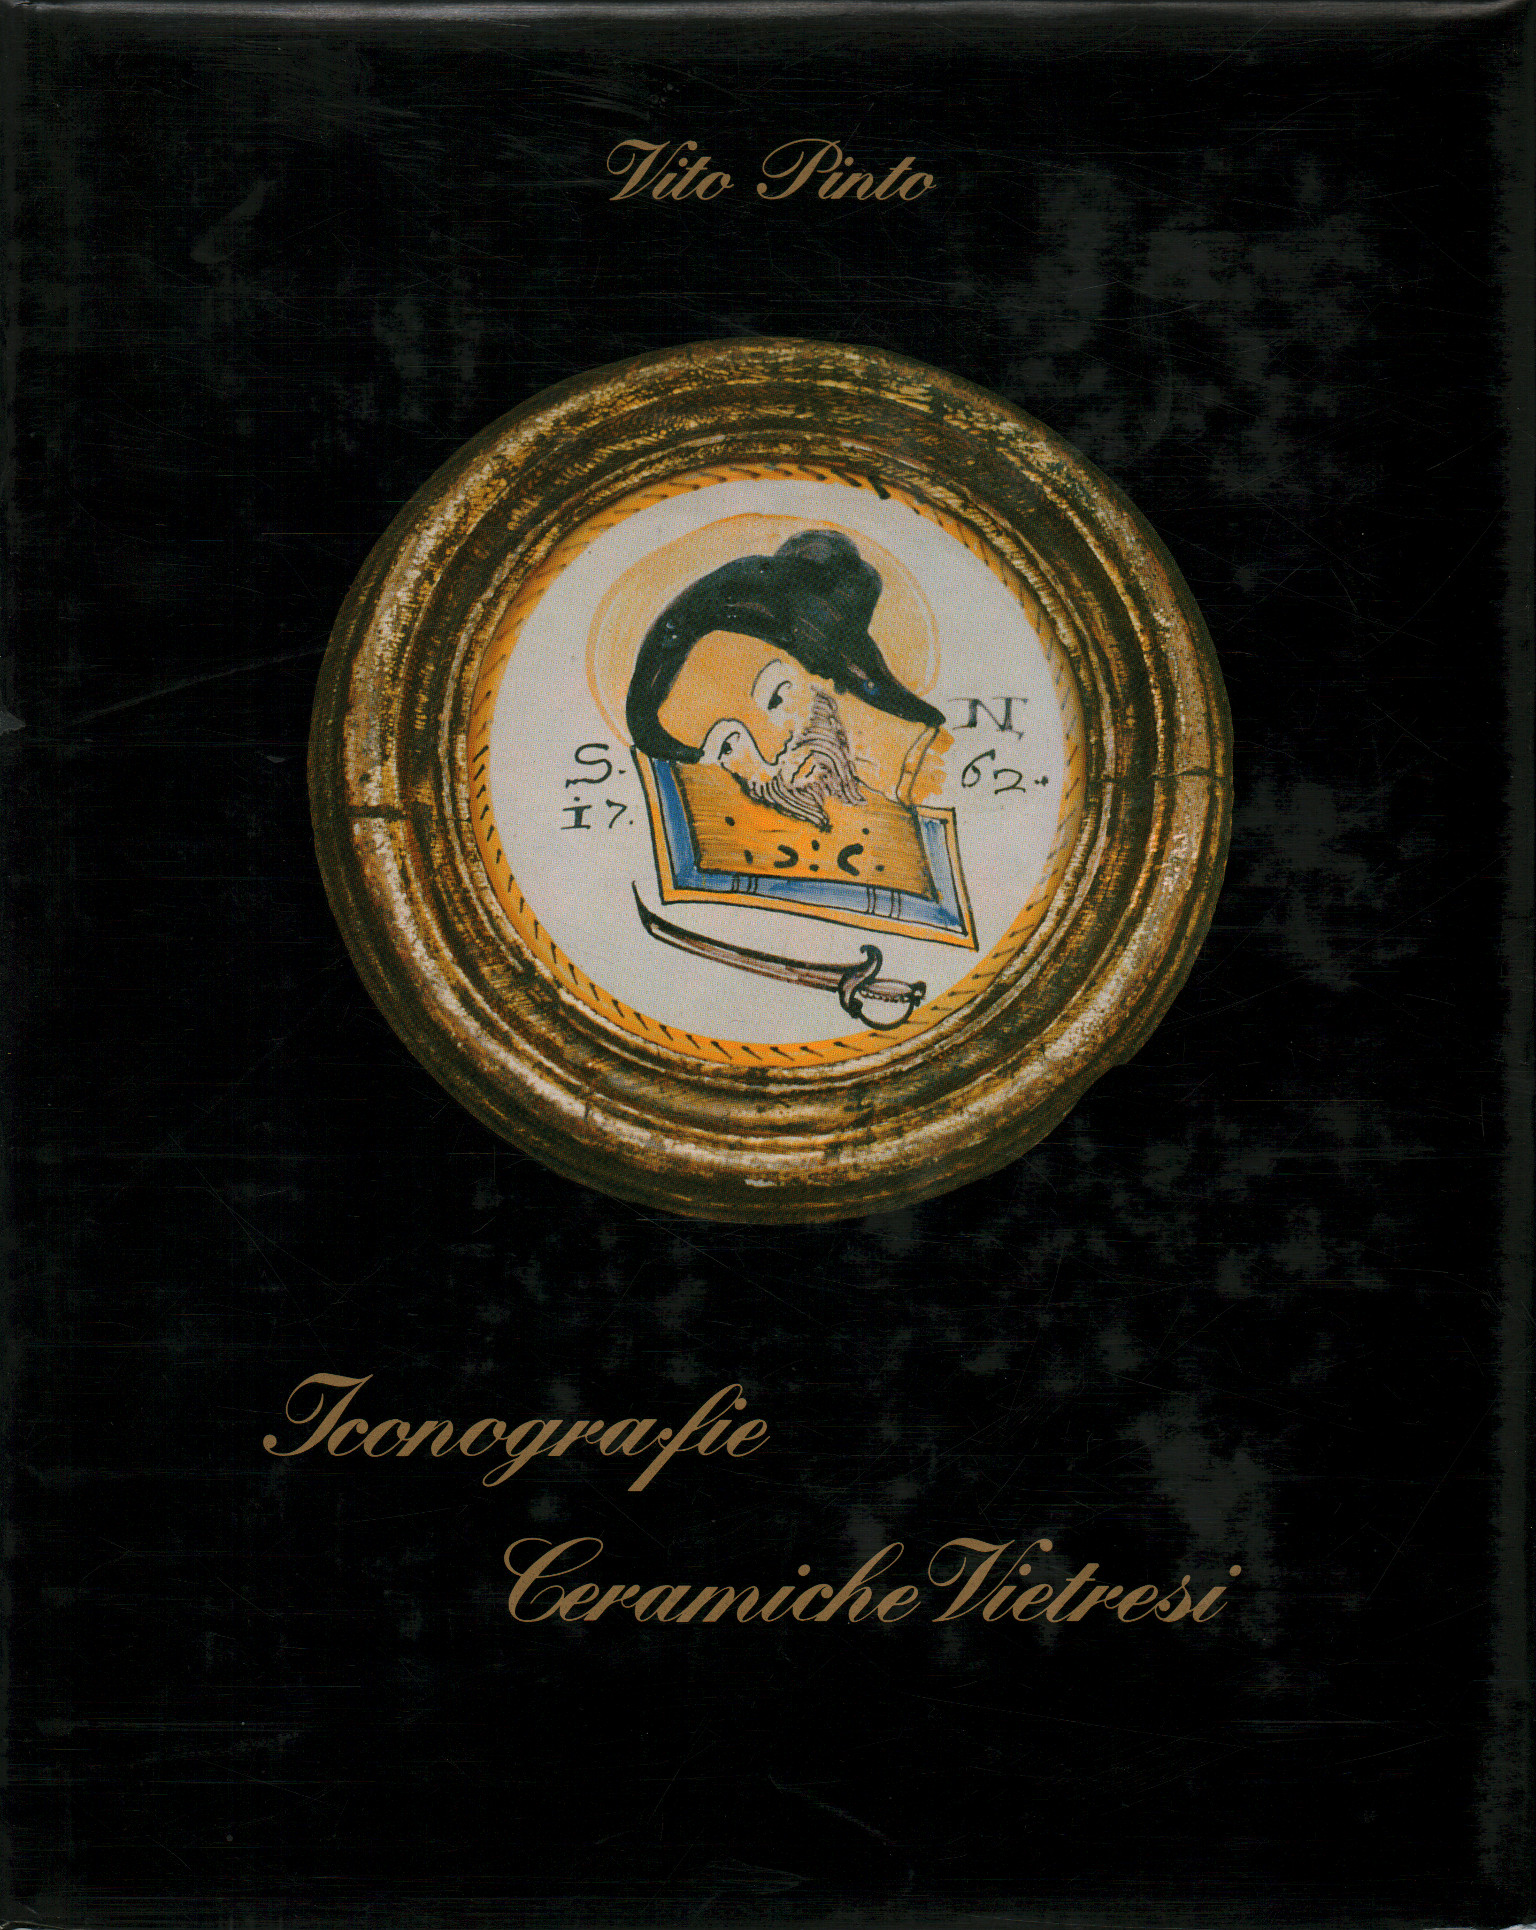 Iconographie céramique Vietri, Vito Pinto